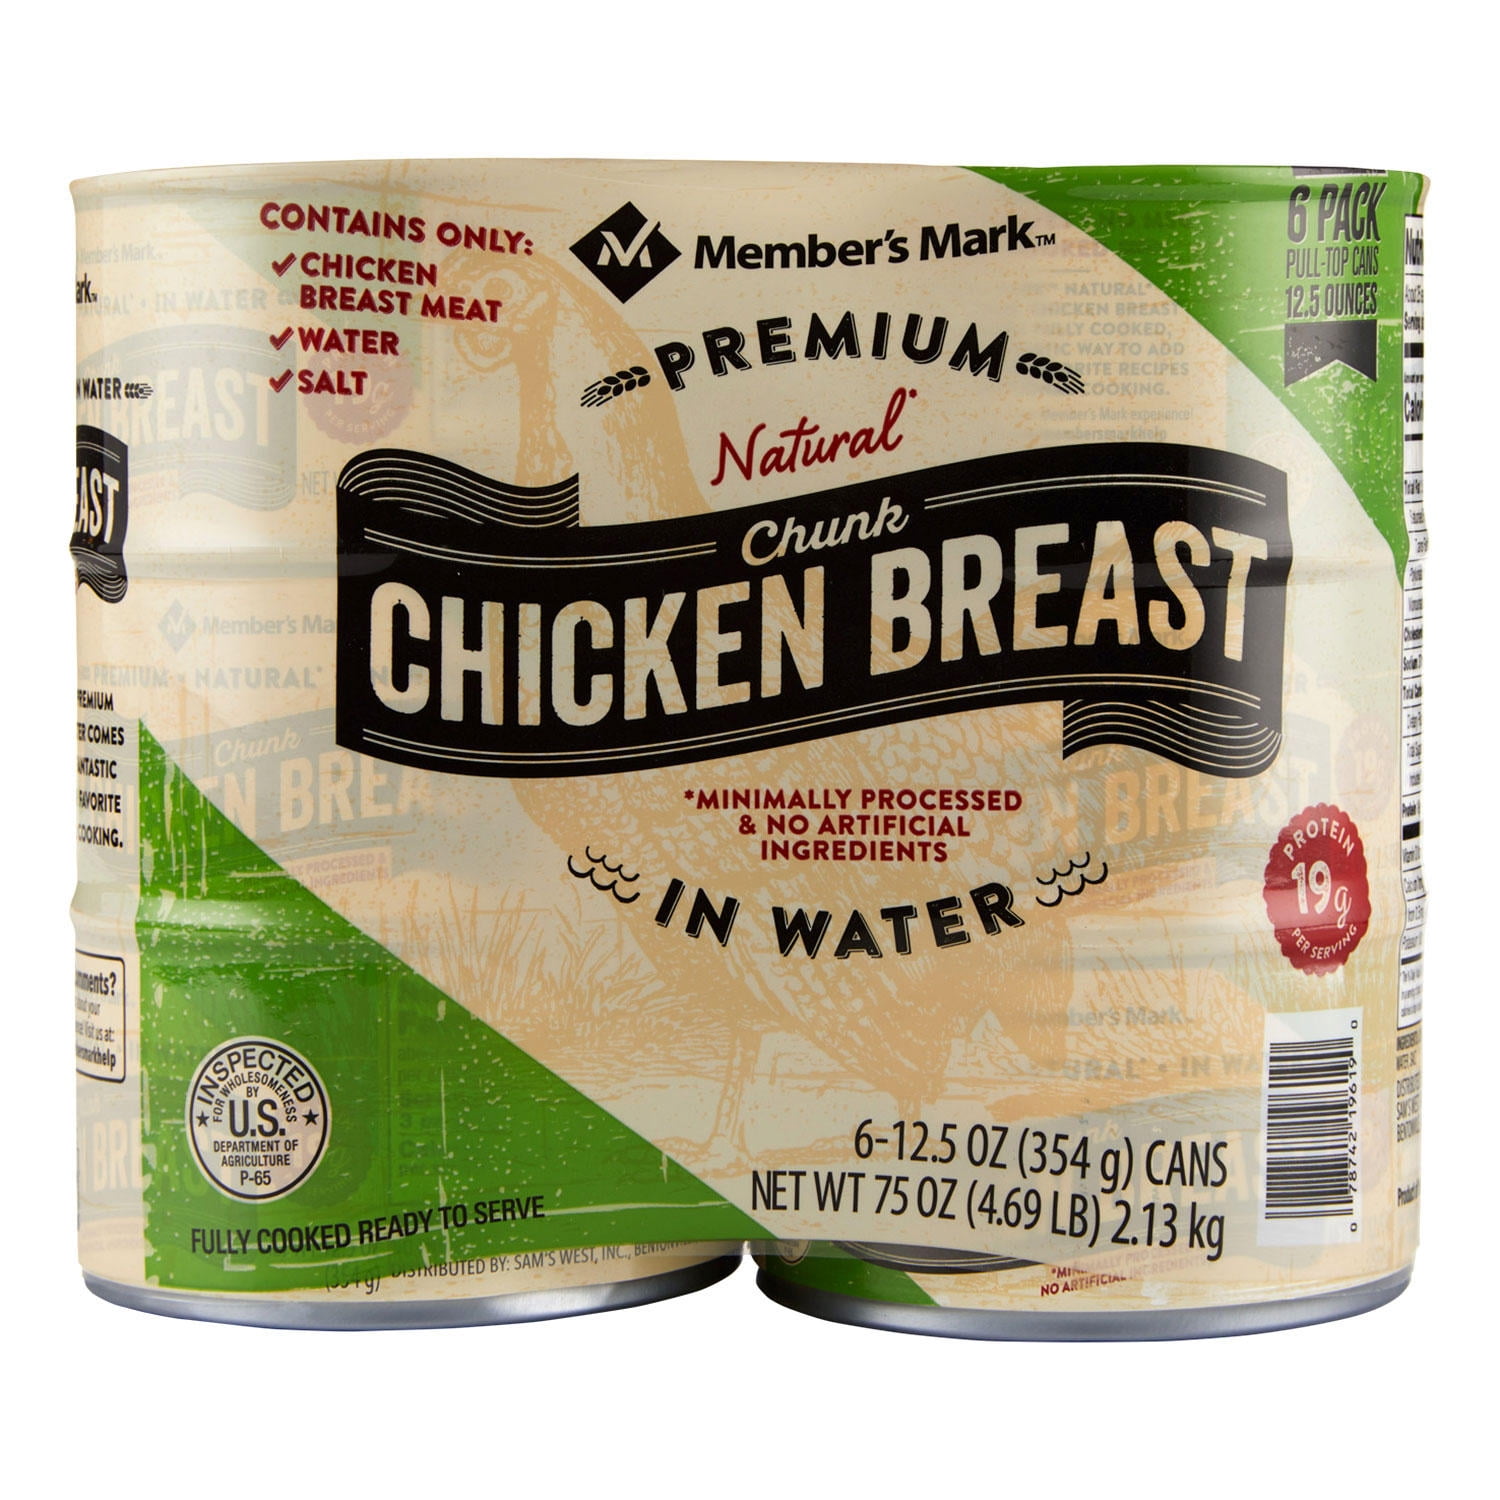 Members Premium Chunk Chicken Breast, 12.5 Oz, 6 Ct 